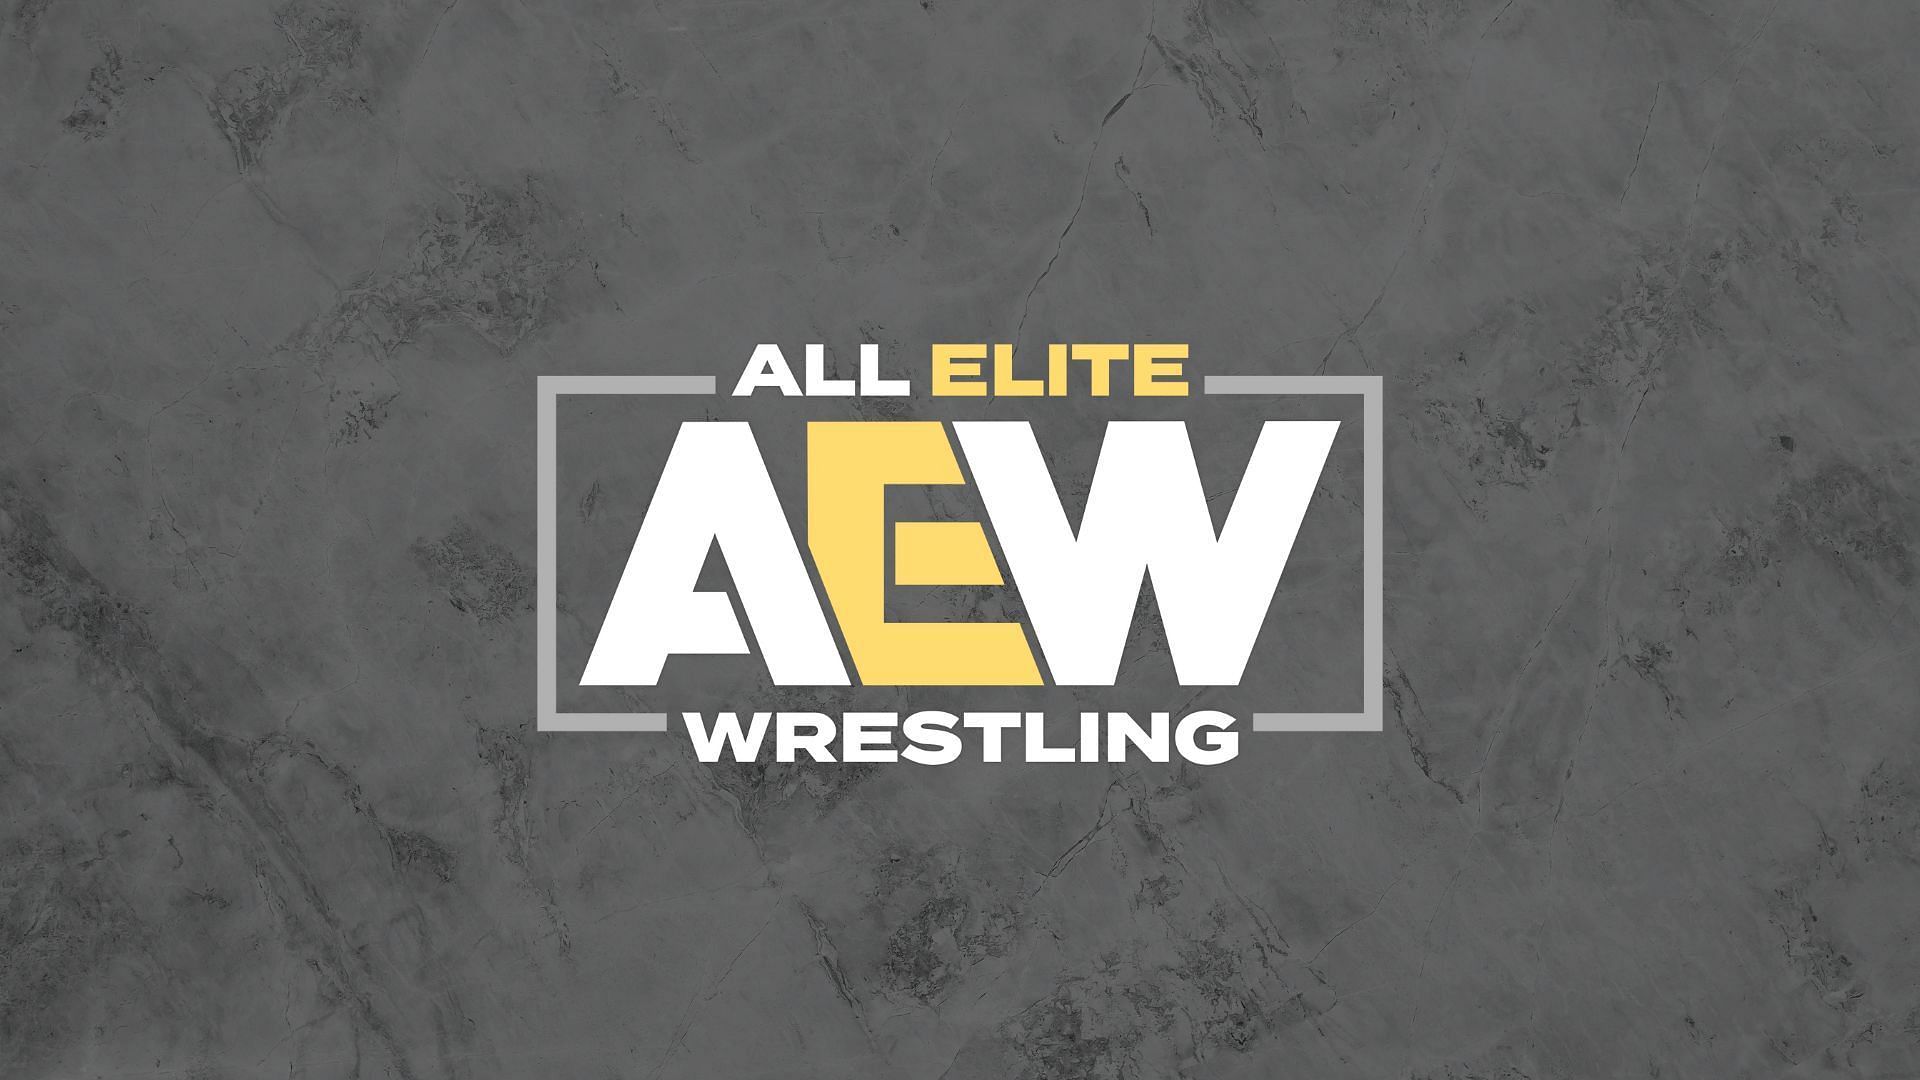 All Elite Wrestling (AEW) is based in Jacksonville, Florida.